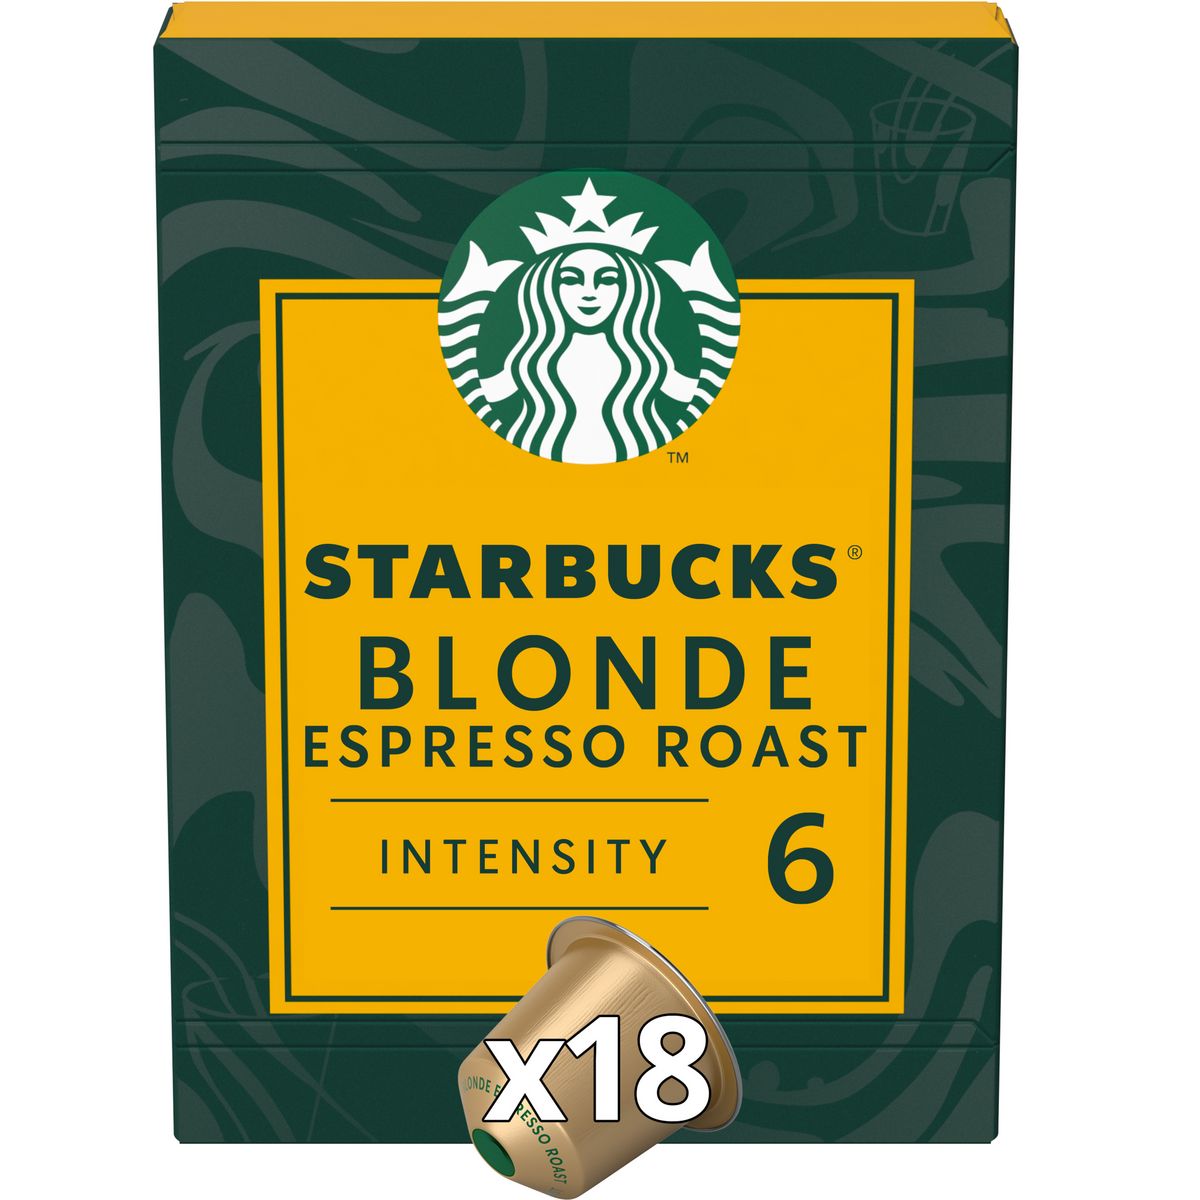 STARBUCKS Capsules de café blonde espresso roast intensité 6 compatibles Nespresso 18 capsules 94g